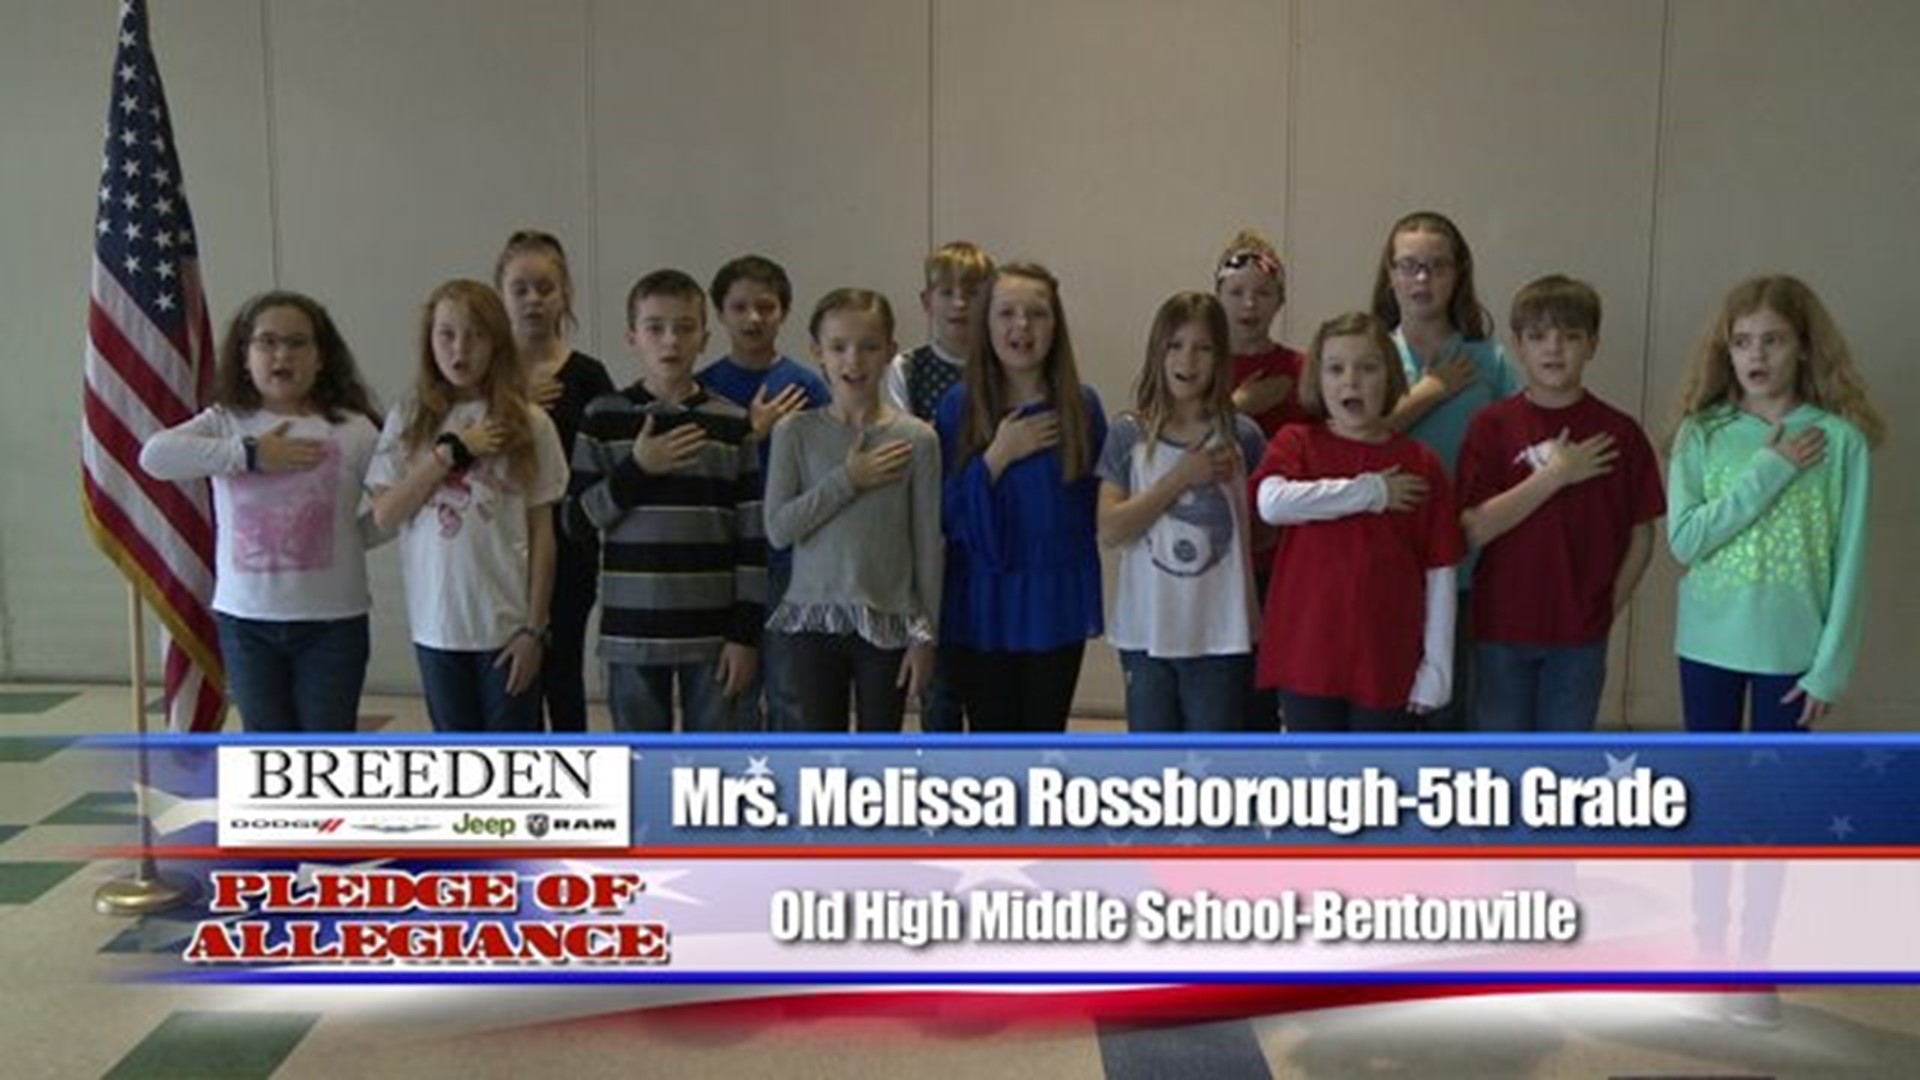 Old High Middle School, Bentonville - Mrs. Melissa Rossborough - 5th Grade